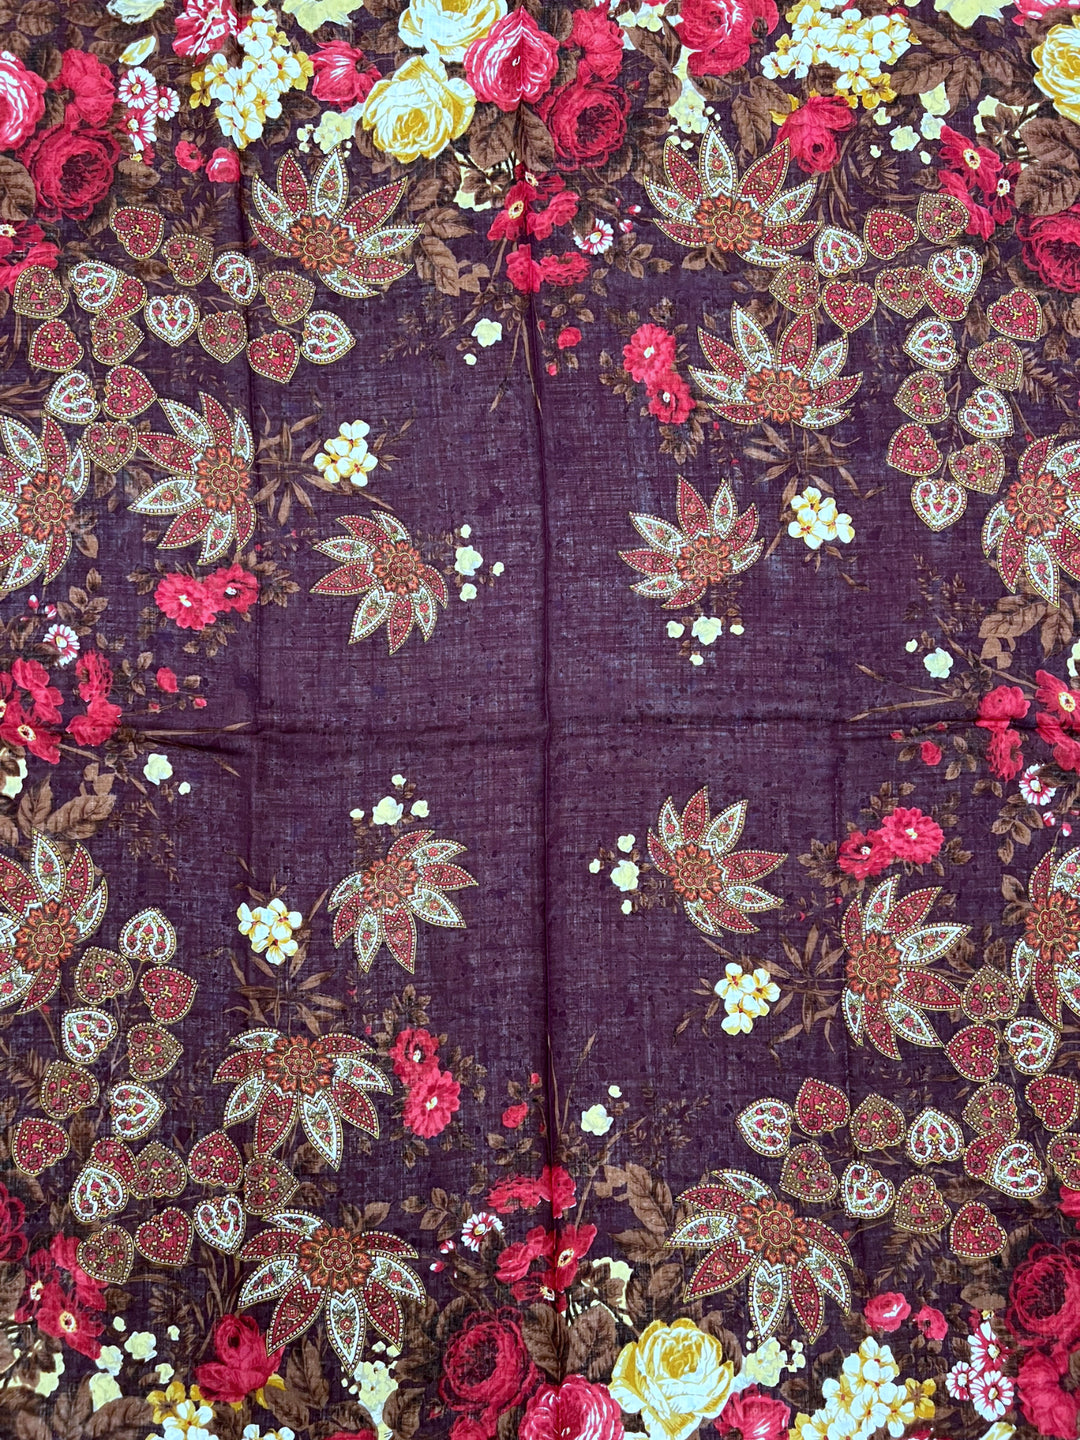 Valentino Silk & Wool Floral Vintage Scarf